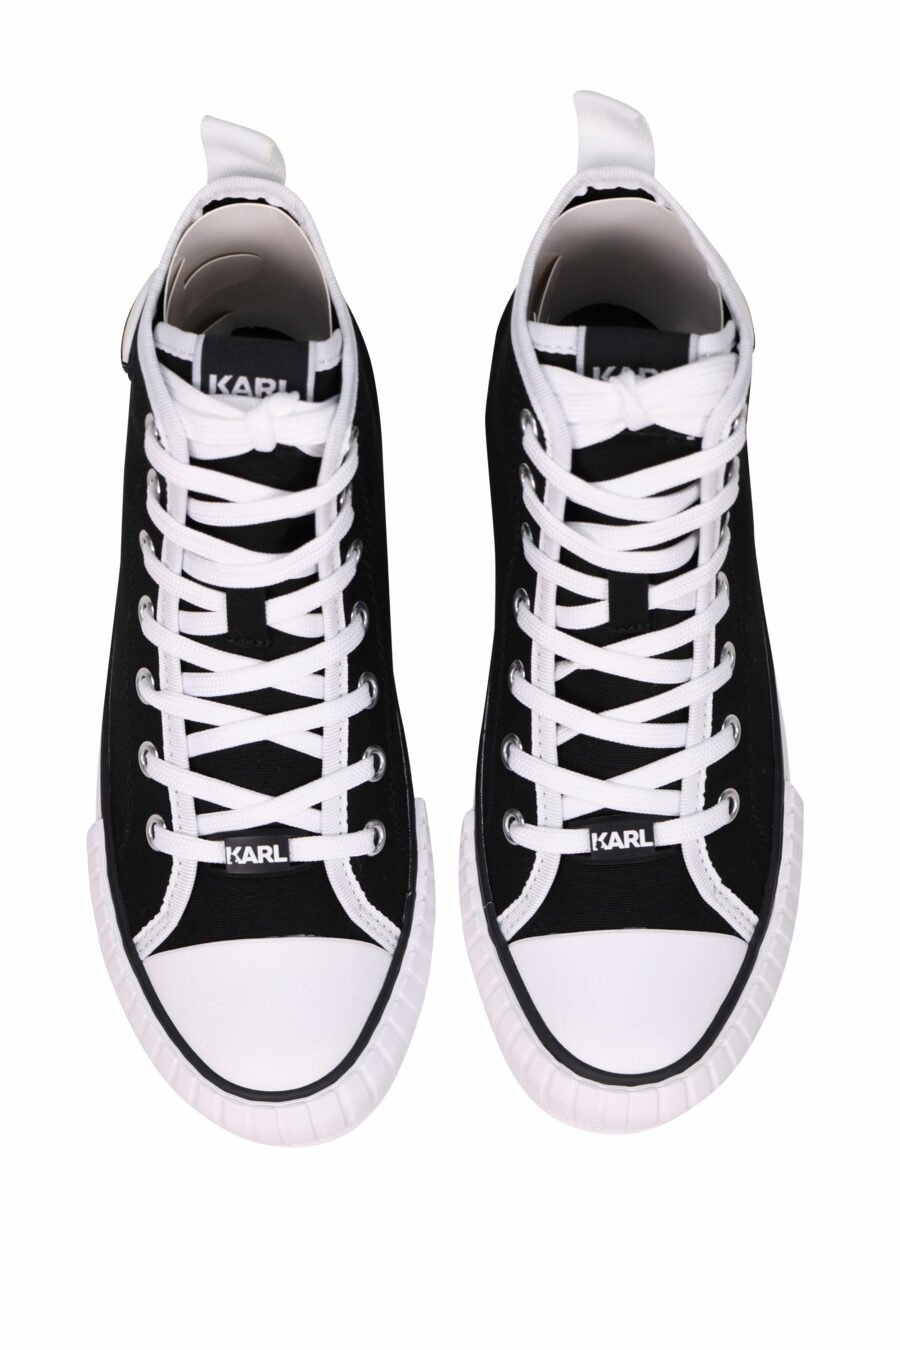 Zapatillas negras altas estilo "converse" con minilogo de goma "karl" - 5059529384769 4